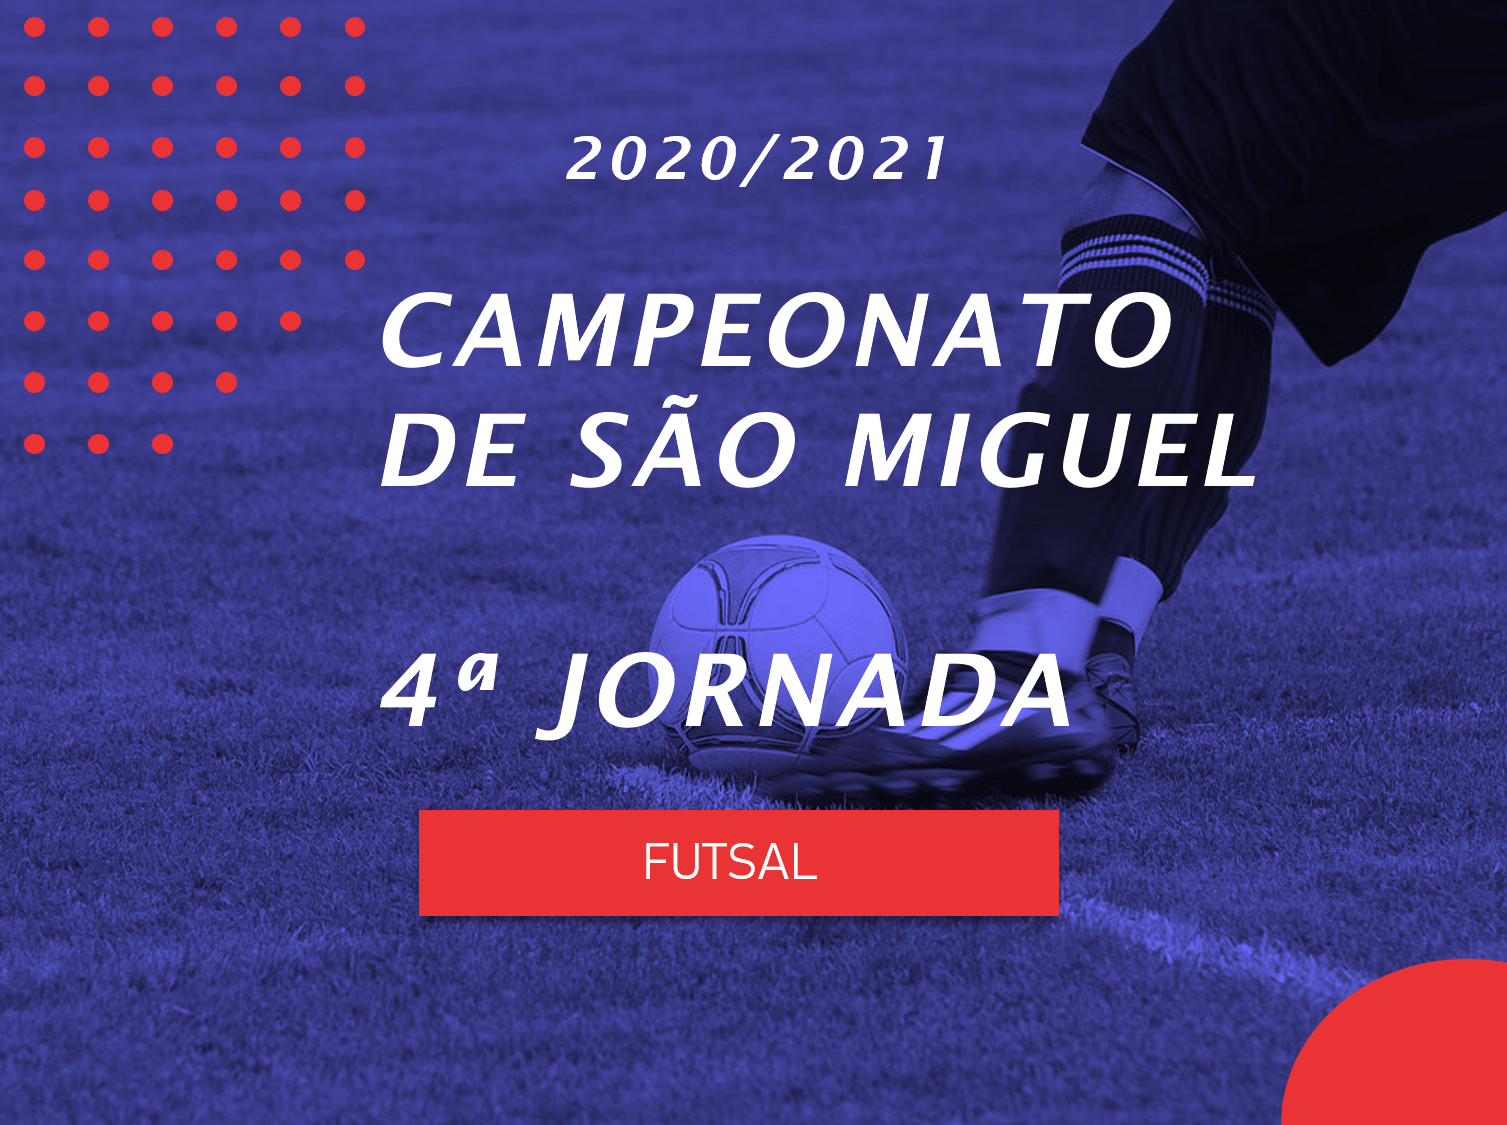 Campeonato de São Miguel - 4ª Jornada - Futsal